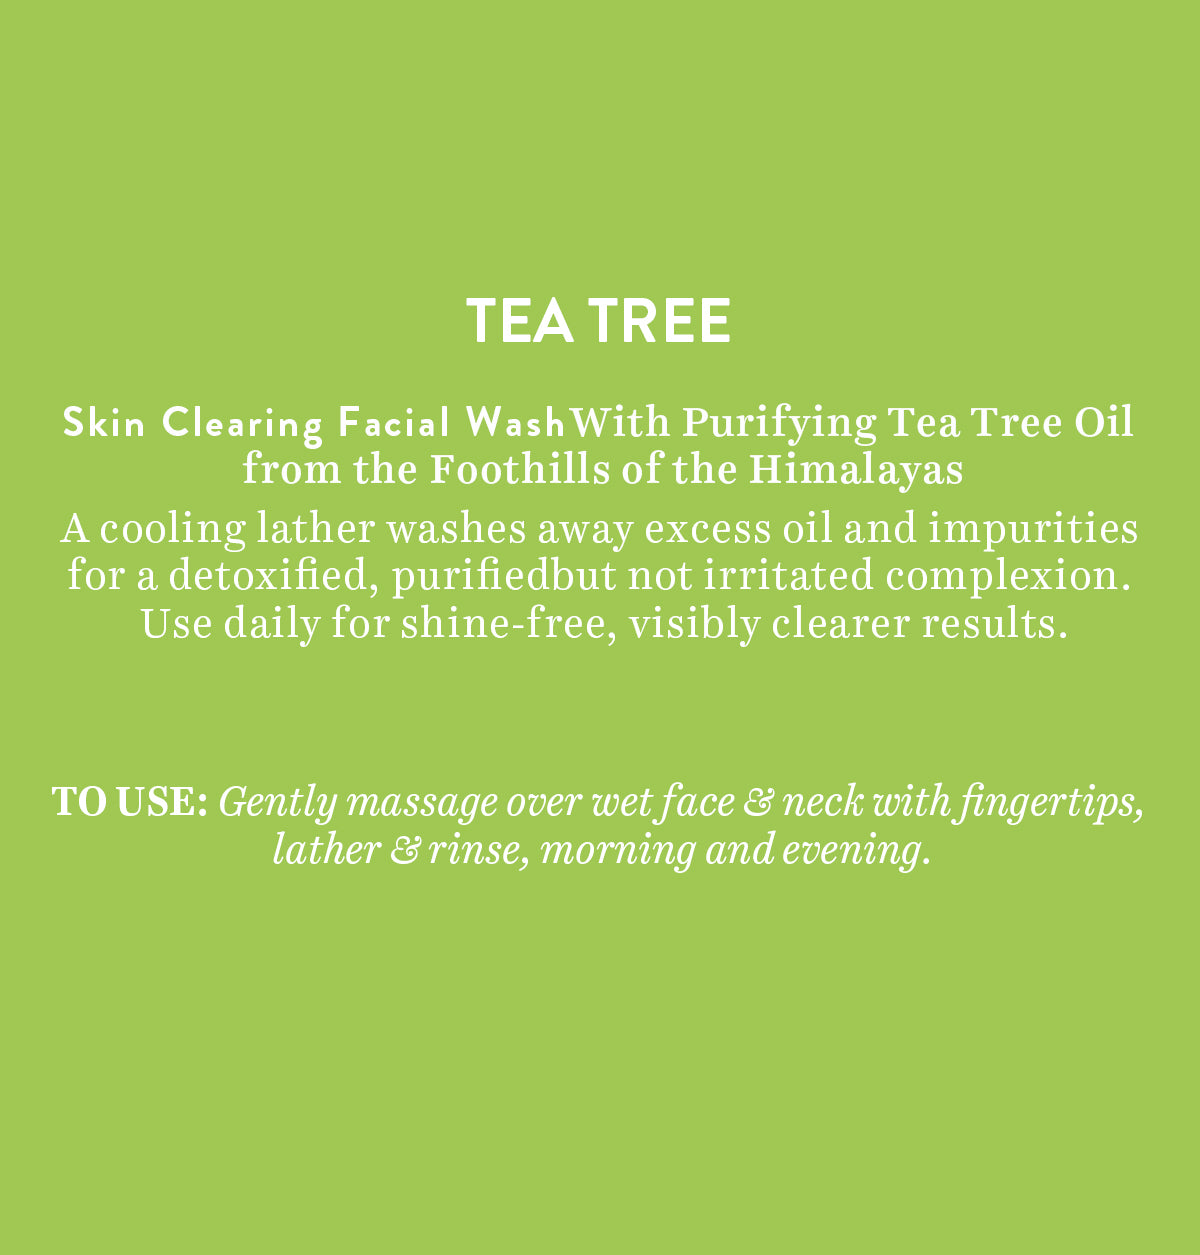 Tea Tree Skin Clearing facial wash 150ml